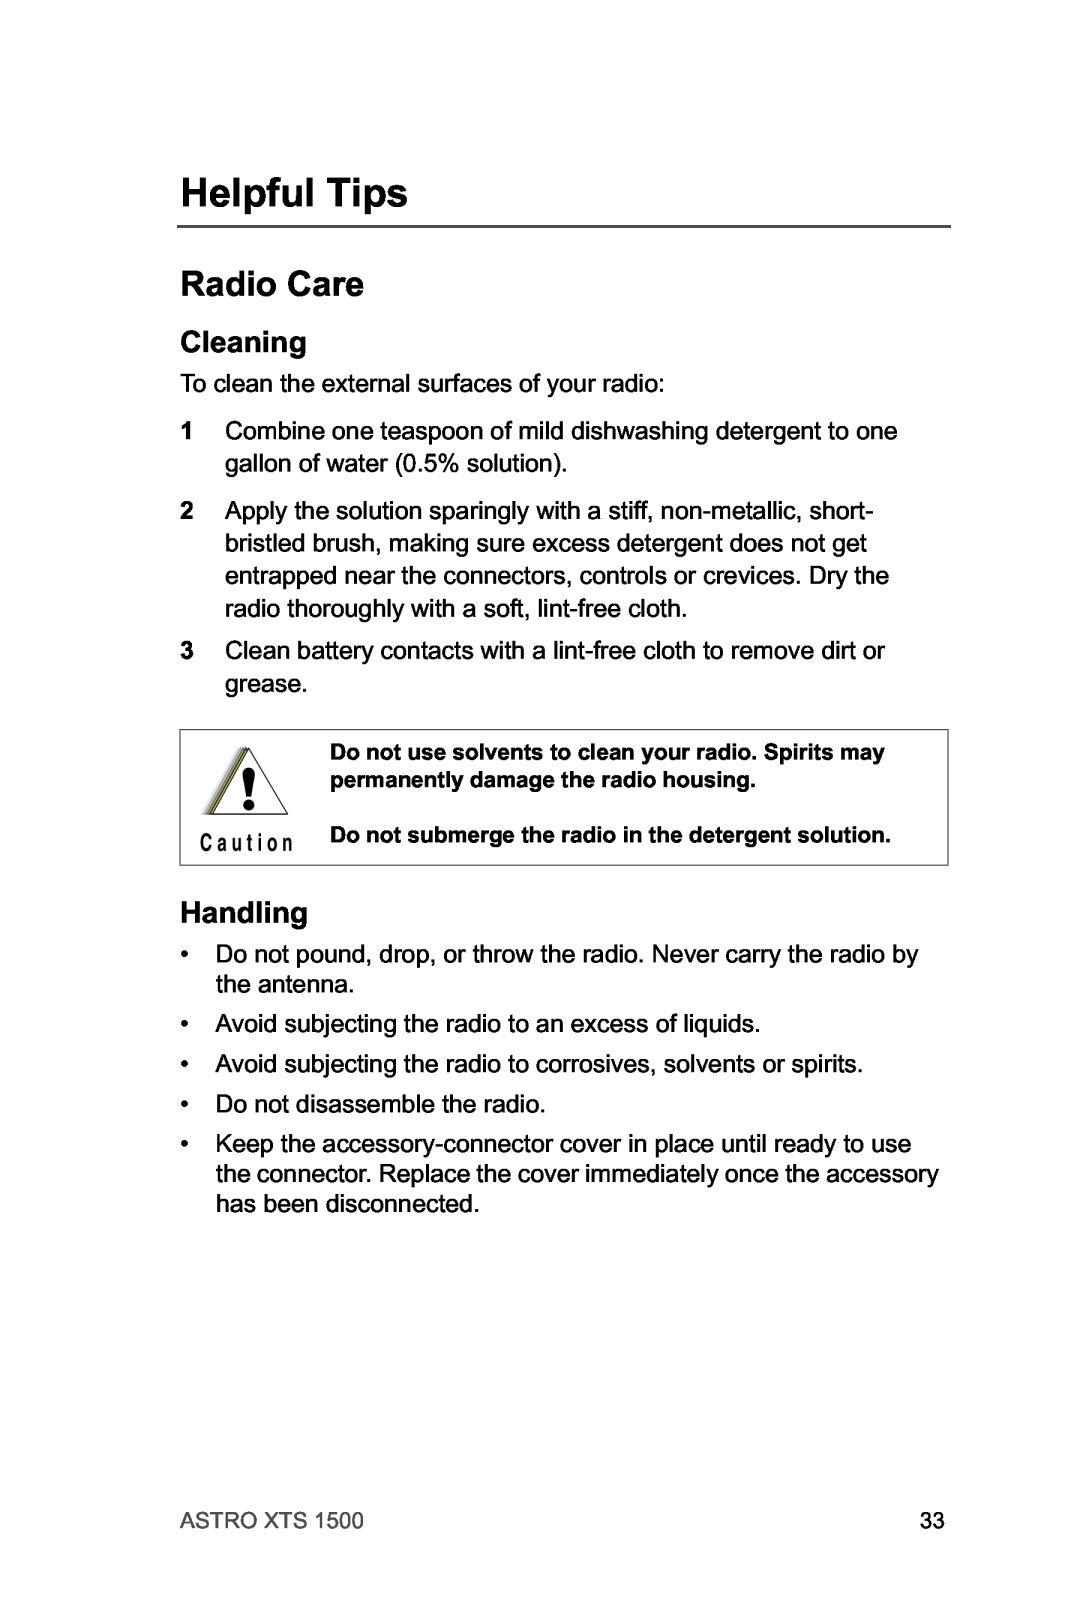 Motorola XTSTM 1500 manual Helpful Tips, Radio Care, Cleaning, Handling 